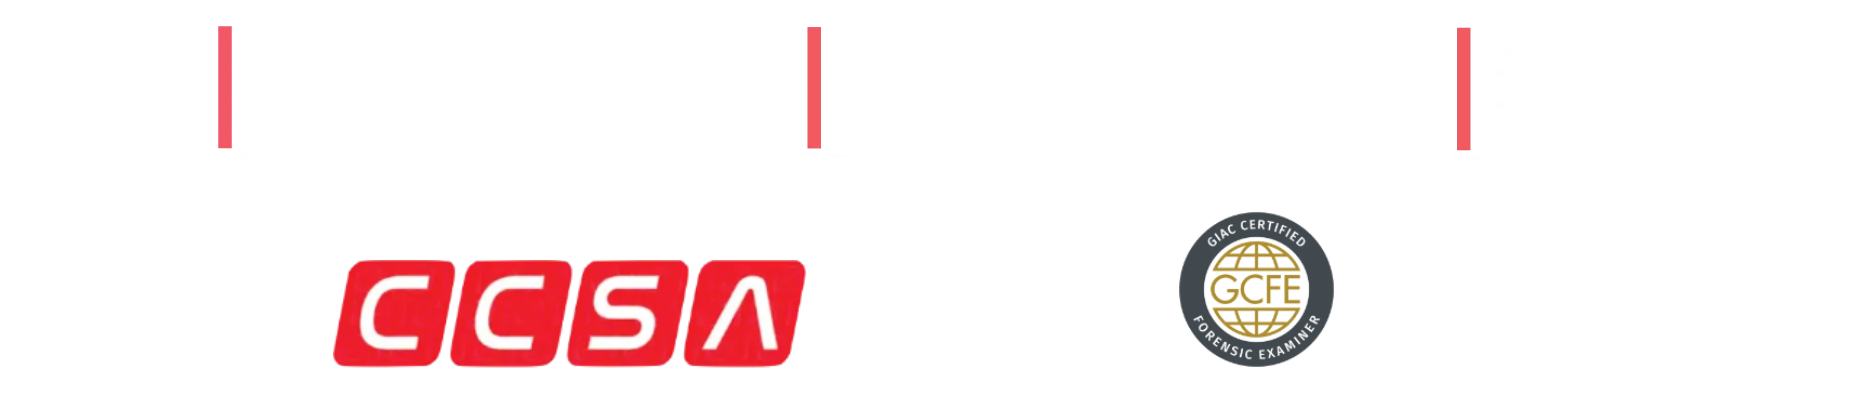 Certifications: CEH, CCISO, ECSA, CCSA, GCFE